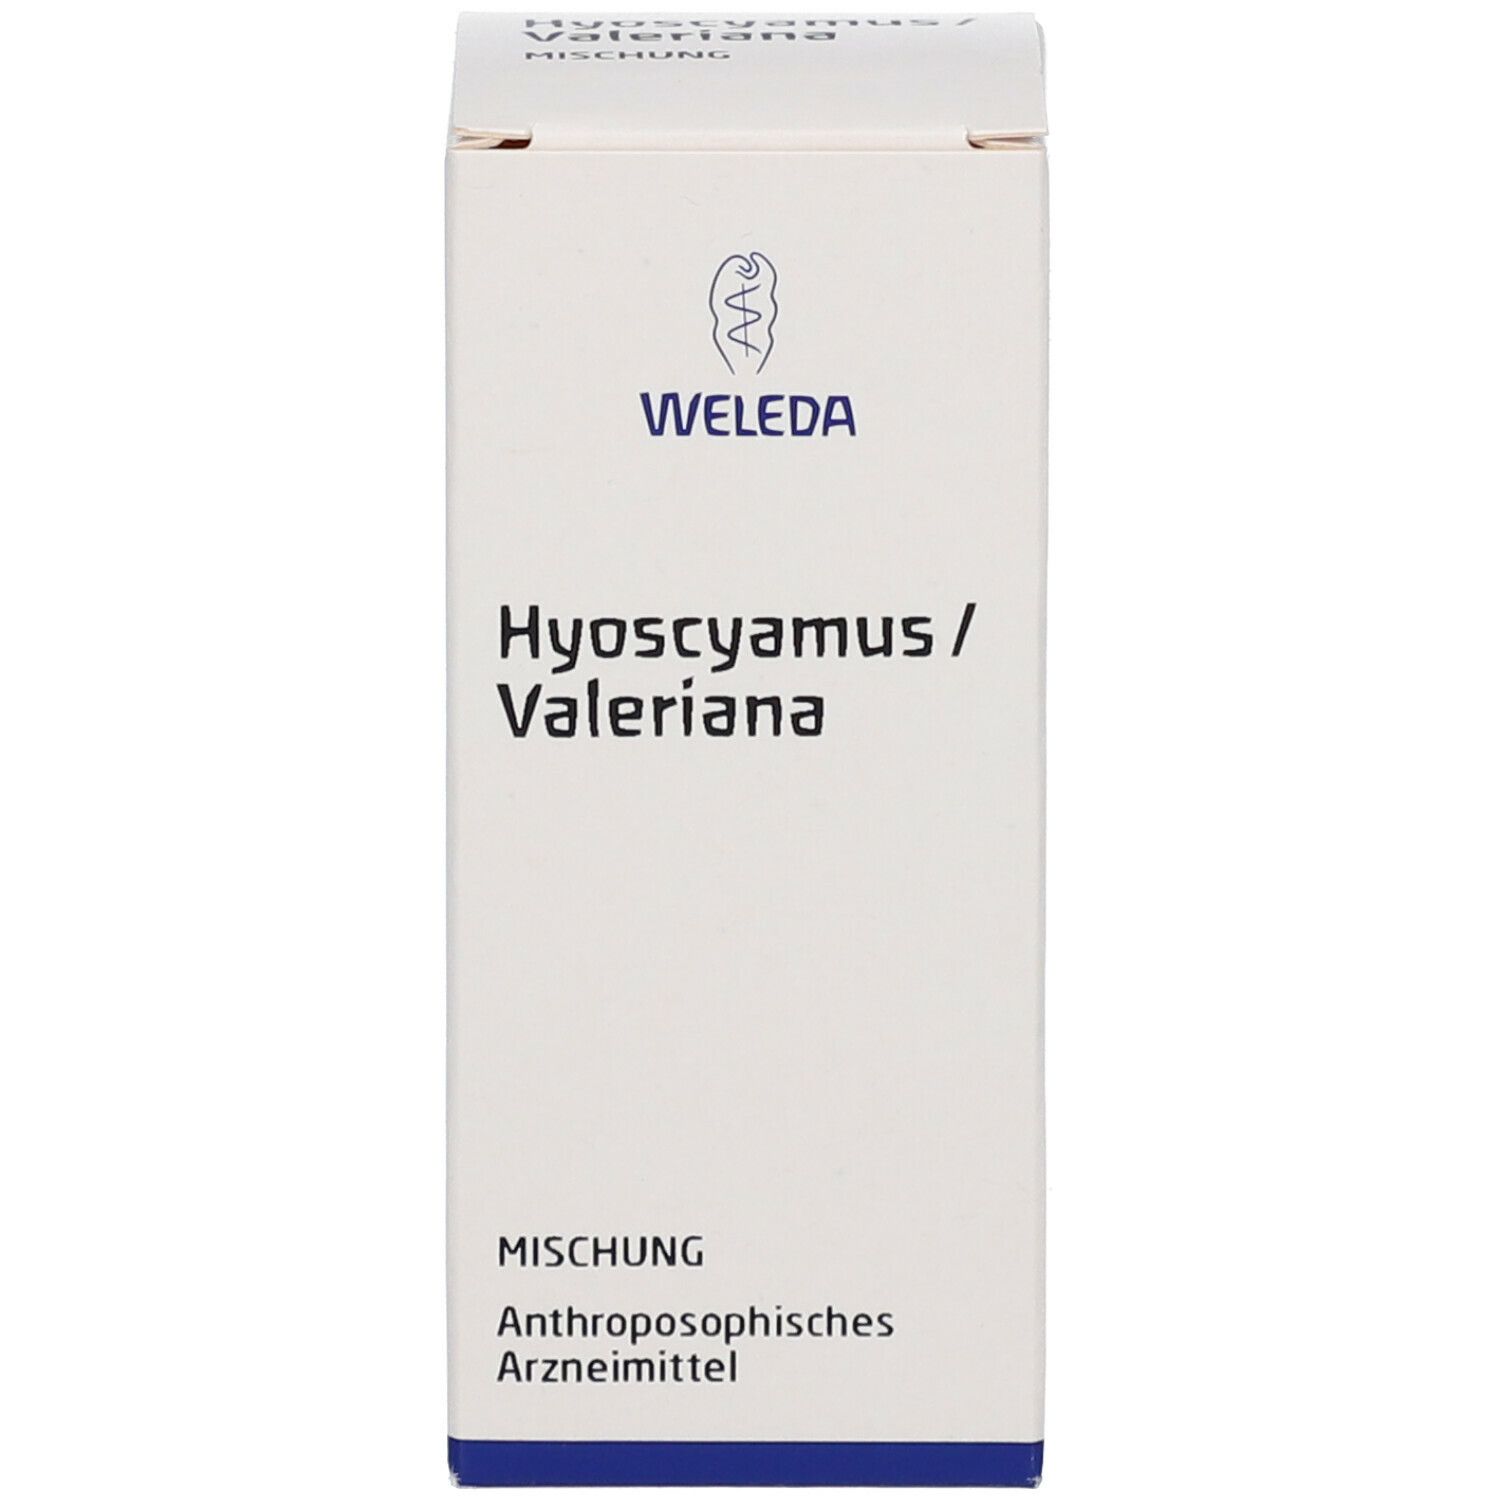 Hyosyamus/Valeriana